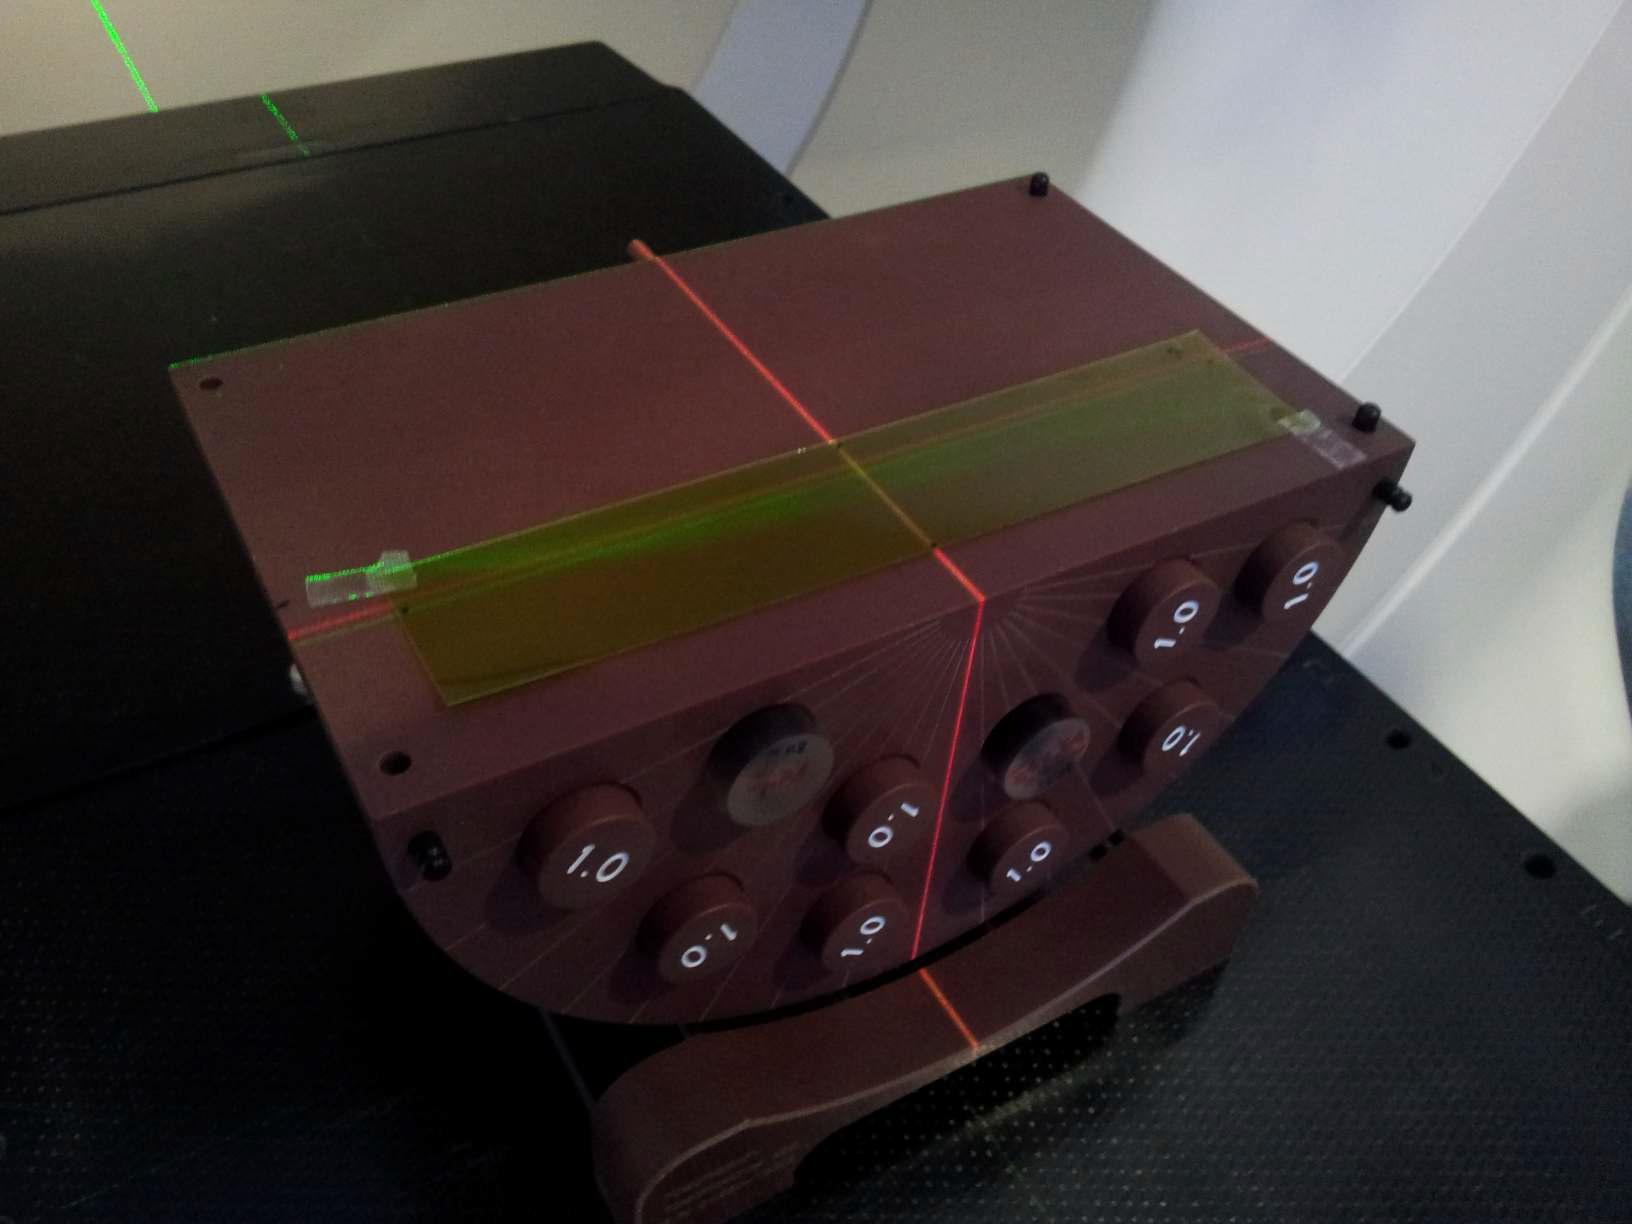 Coronal plane 의 선량 분포 측정을 위해 설치된 Gafchromic film